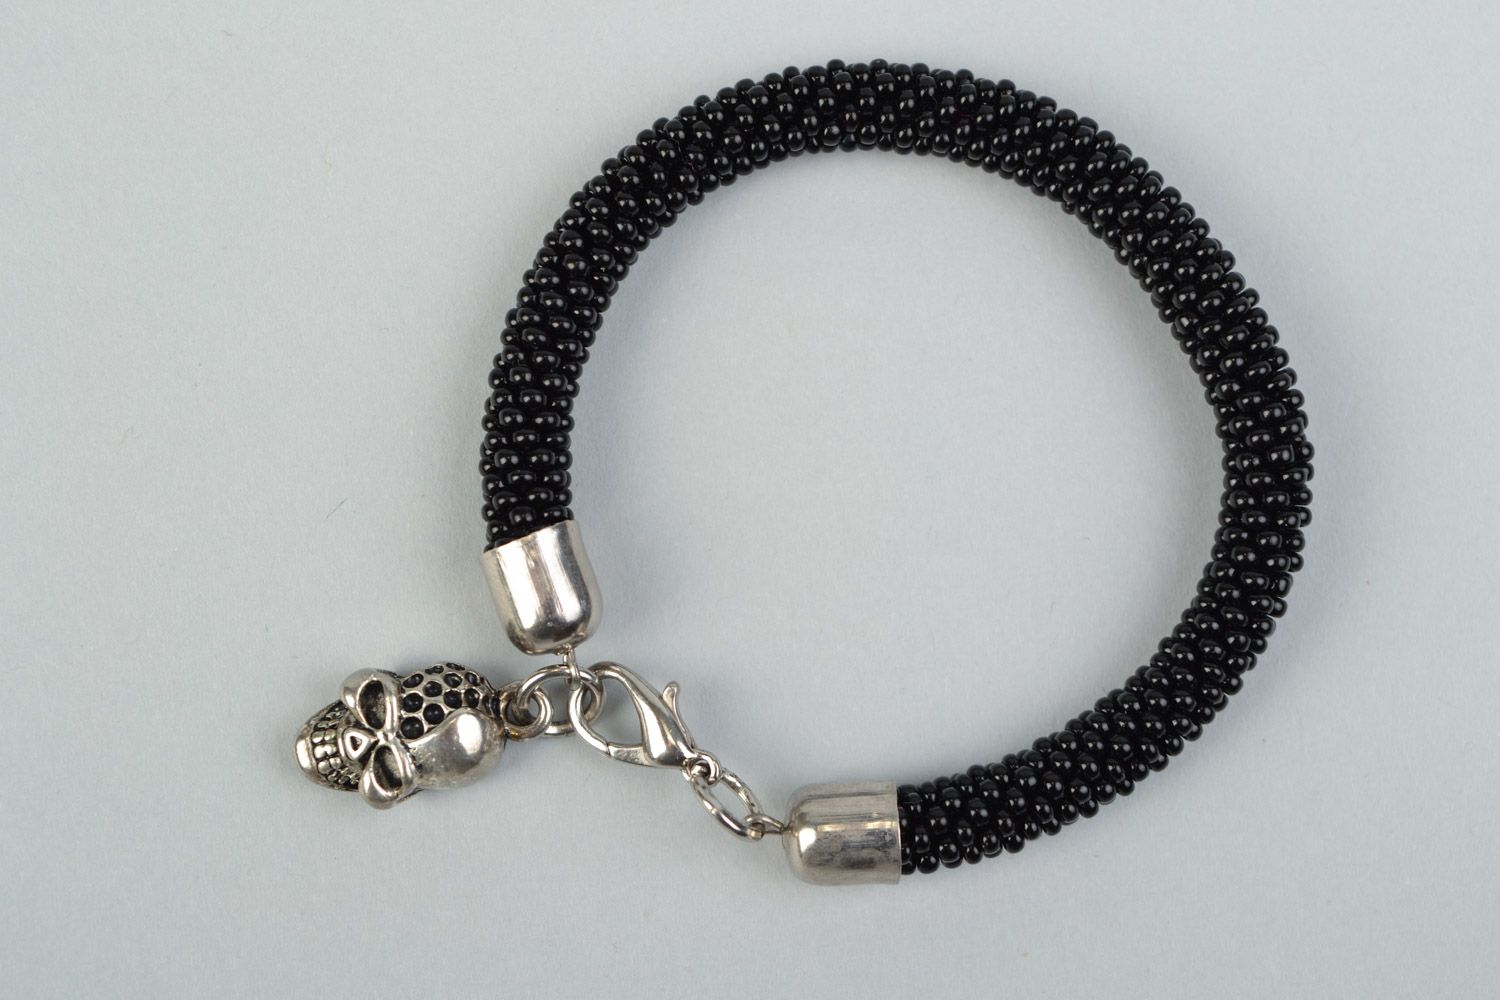 Handmade beaded cord women's wrist bracelet in black color with skull charm photo 2